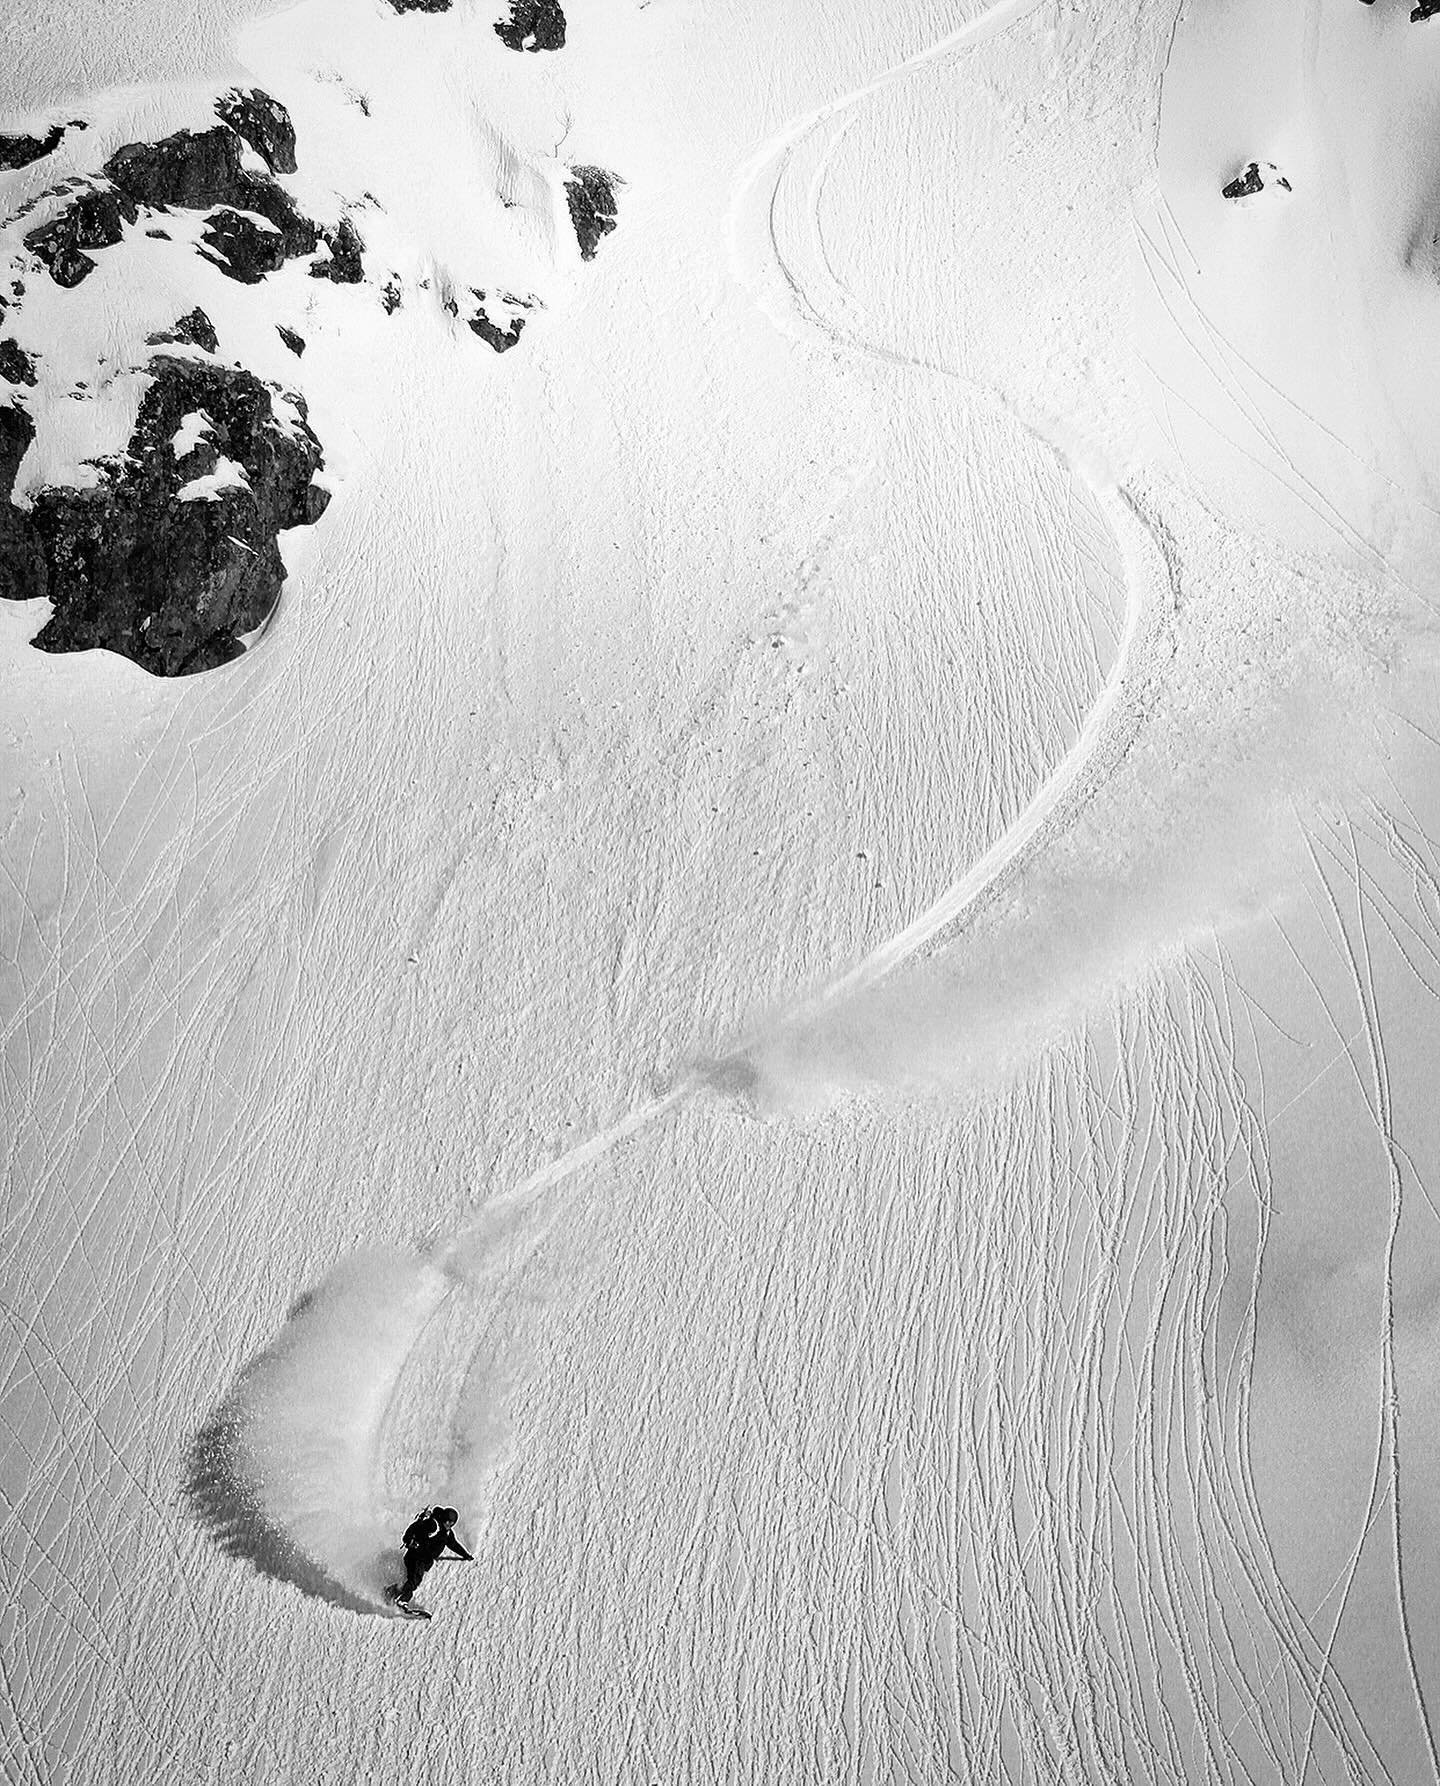 Couple of snowboard turns a couple minutes apart.

#40tribes #amysterytogodowninhistory #lofoten #norway